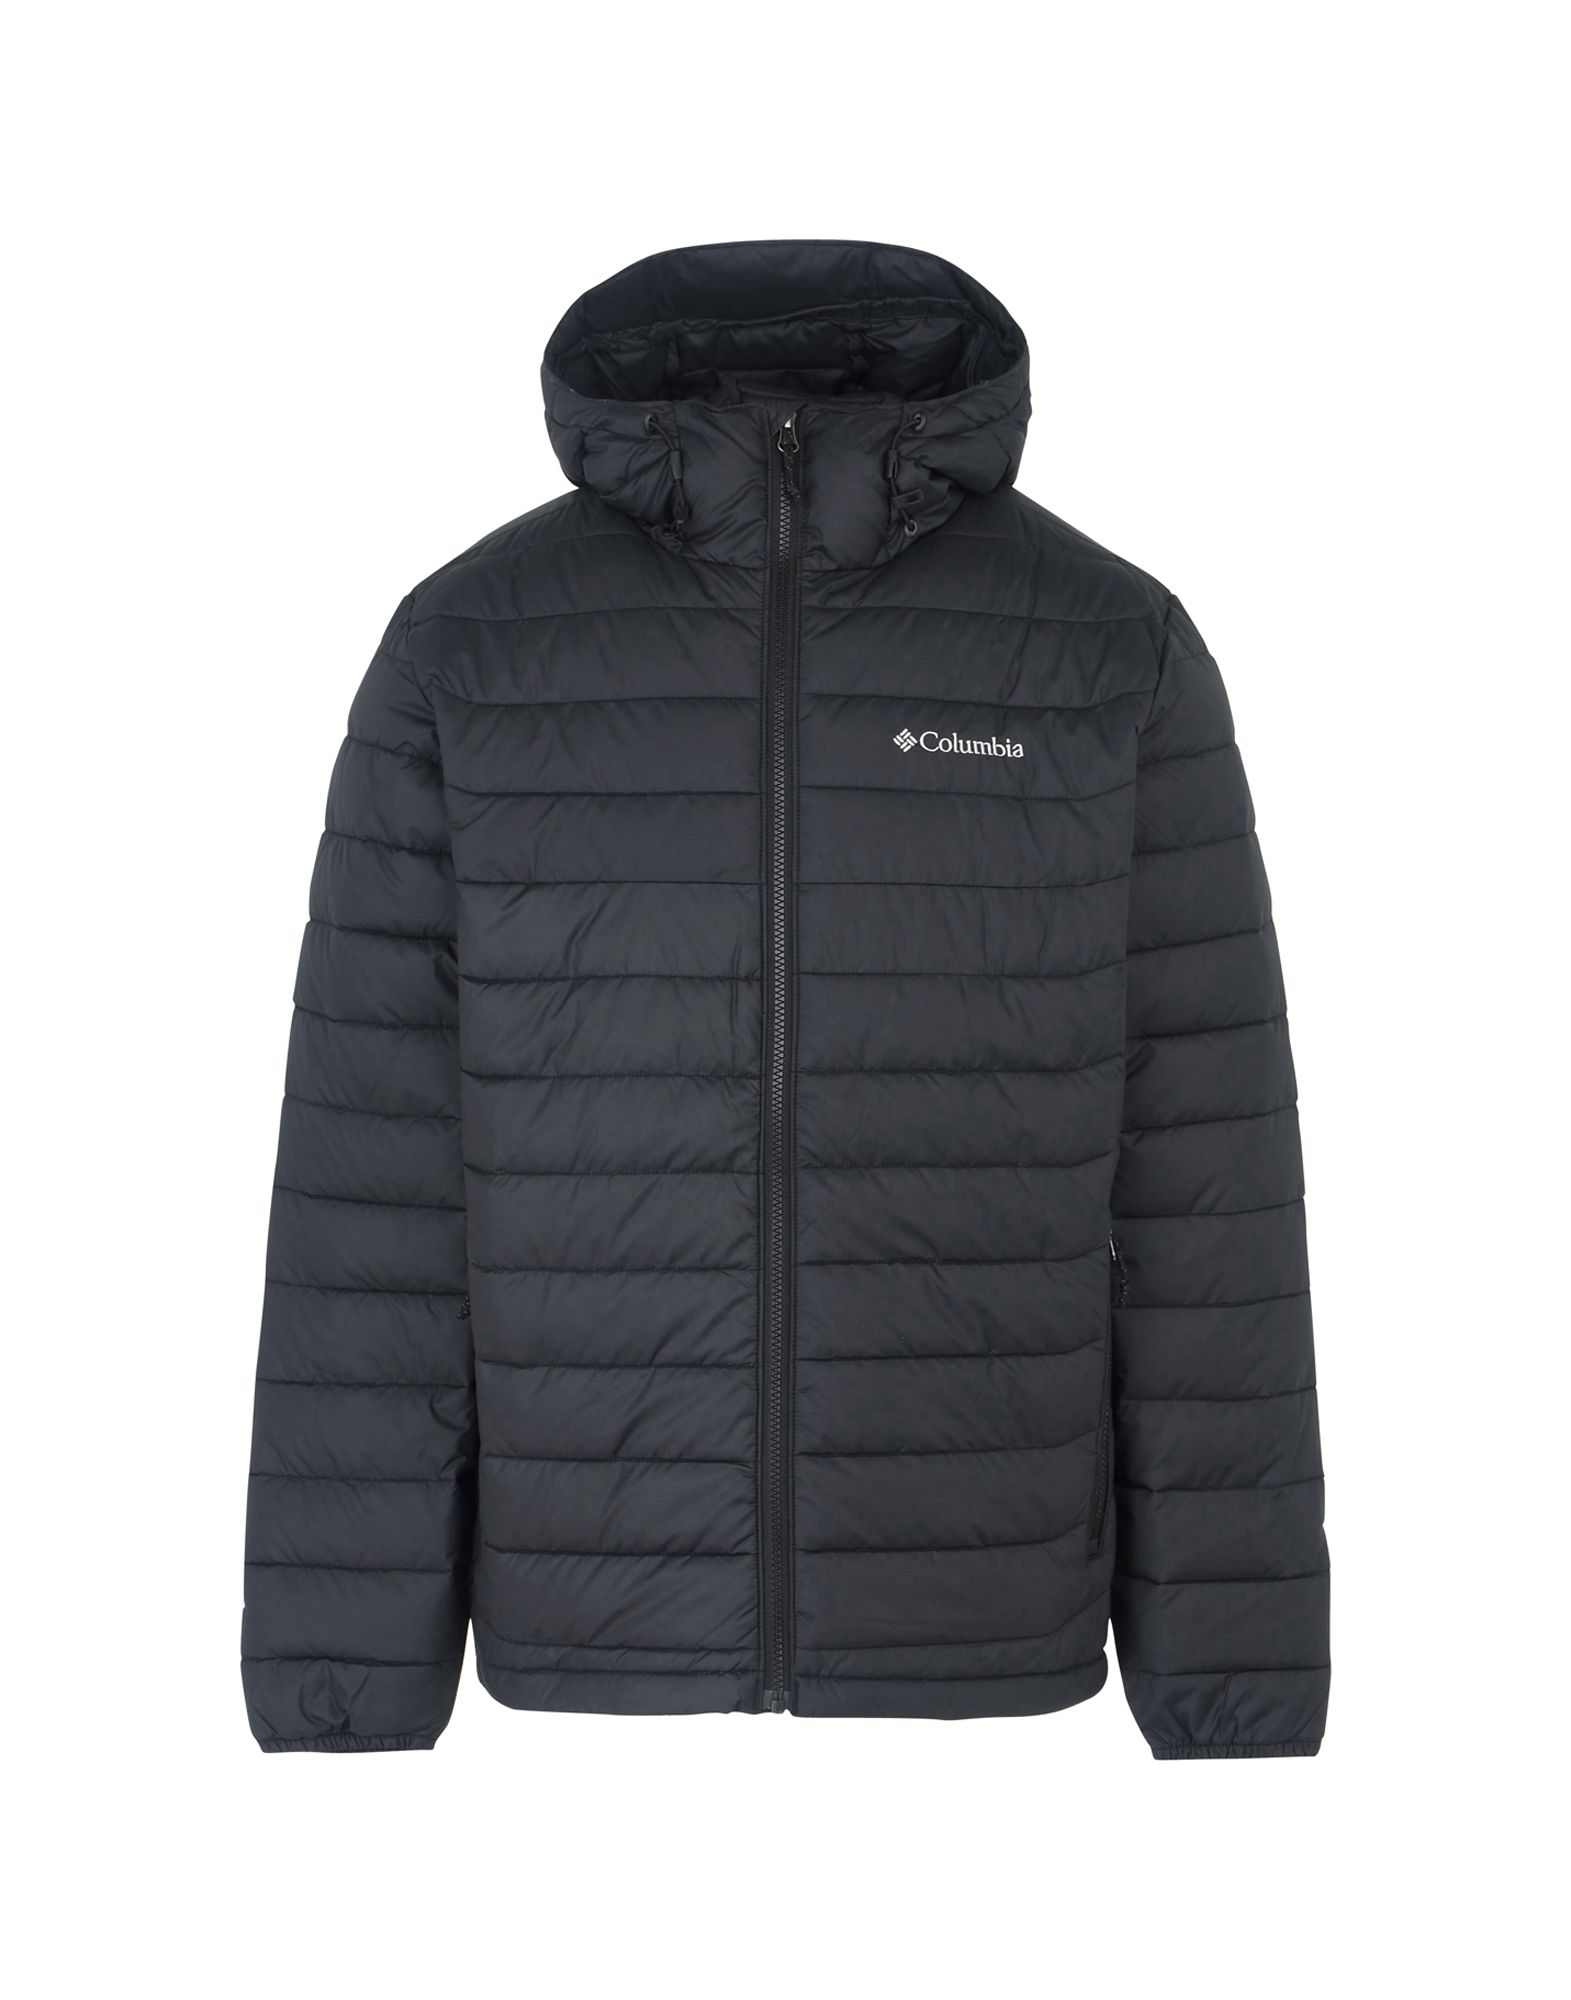 COLUMBIA Down jackets | Smart Closet